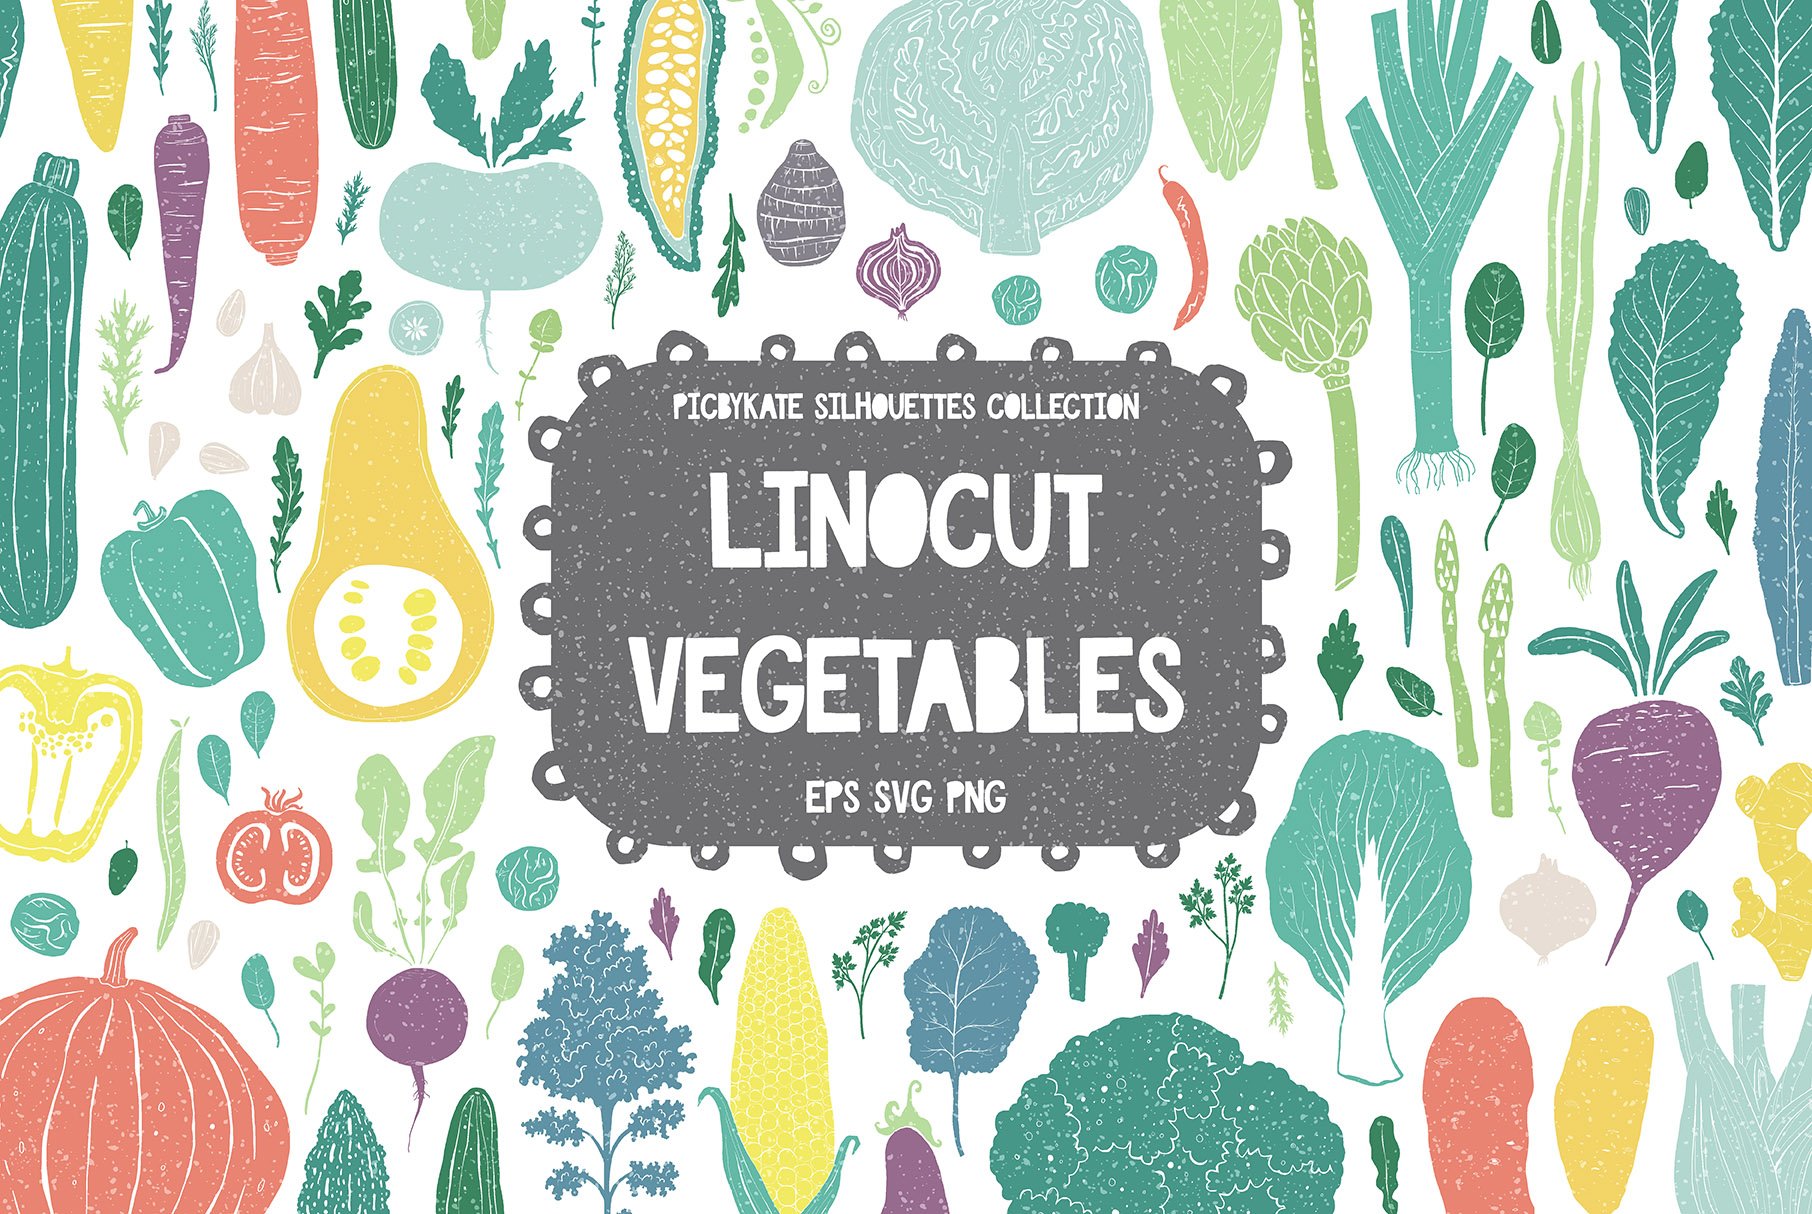 90 Linocut Vegetables Silhouettes